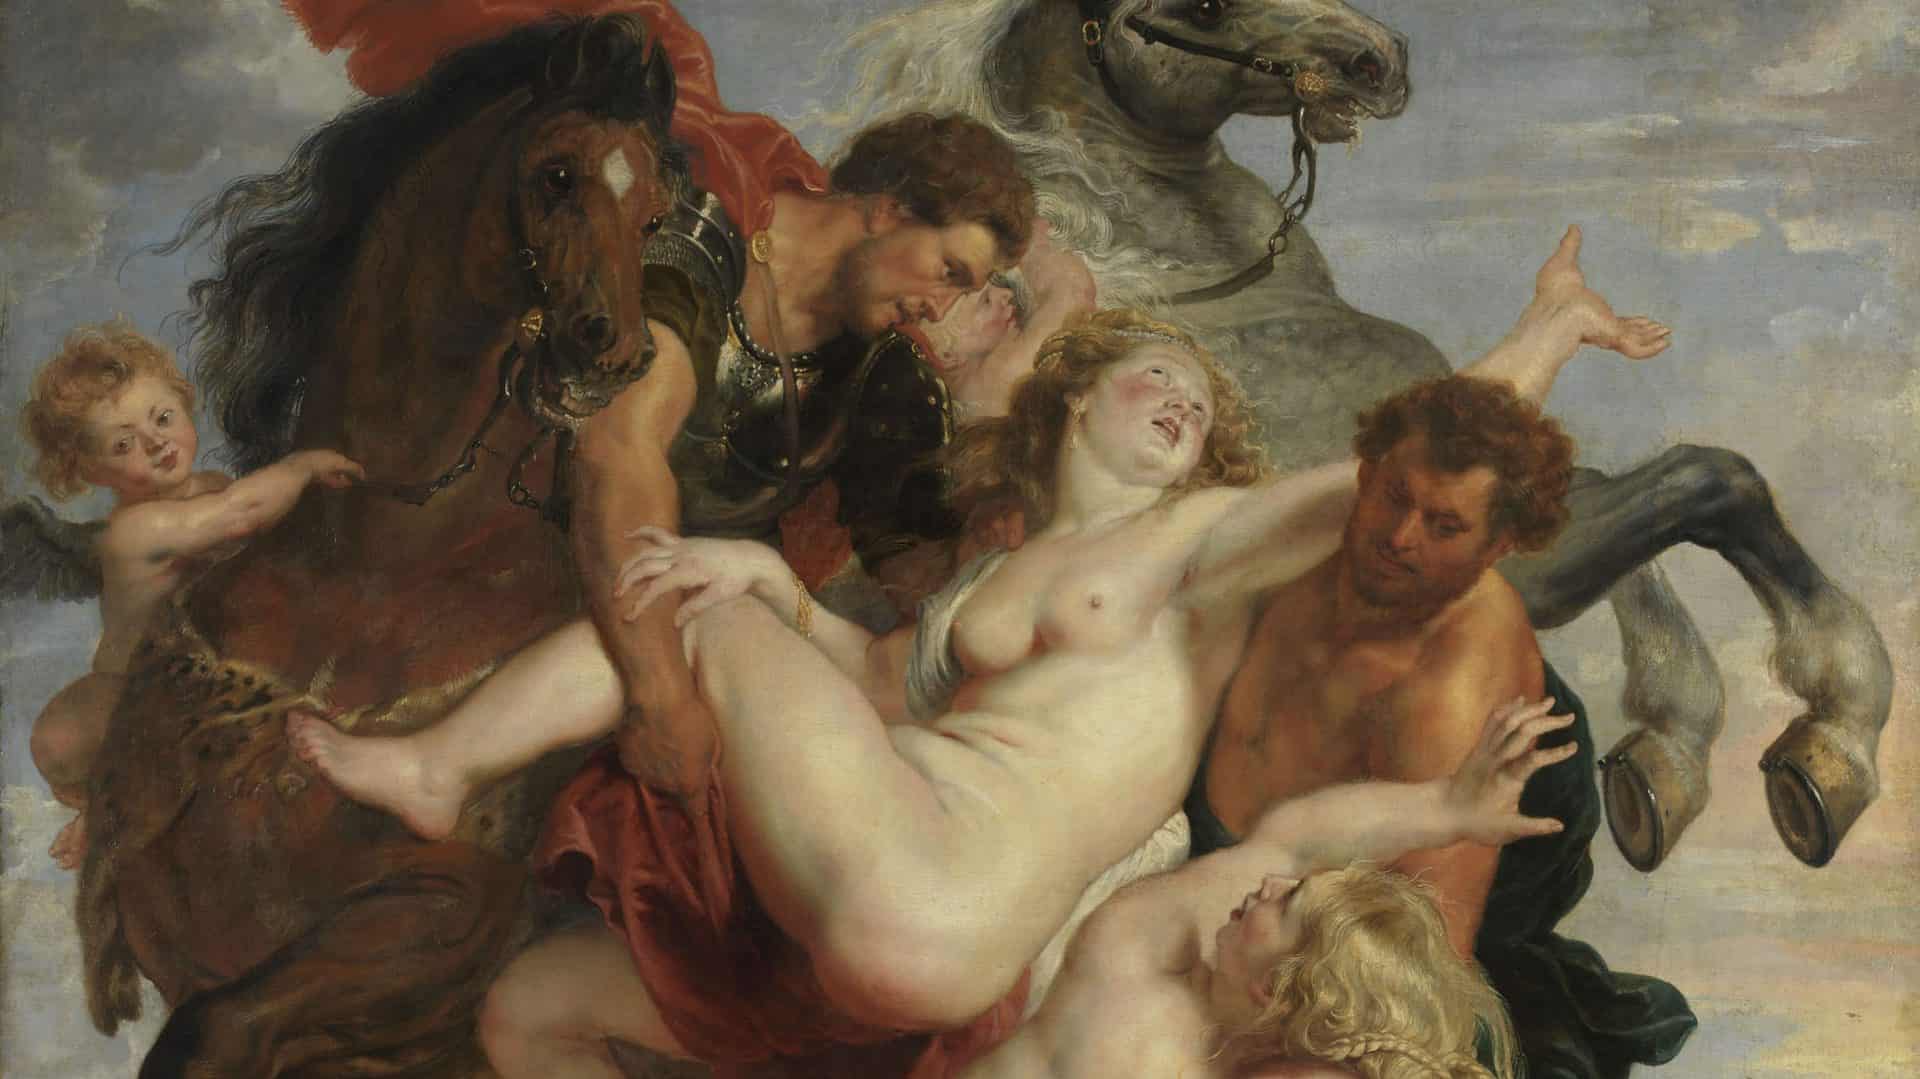 Leinwand (um 1618) Peter Paul Rubens [1577 - 1640] Objektmaß 224x210,5 cm Inventar-Nr.: 321